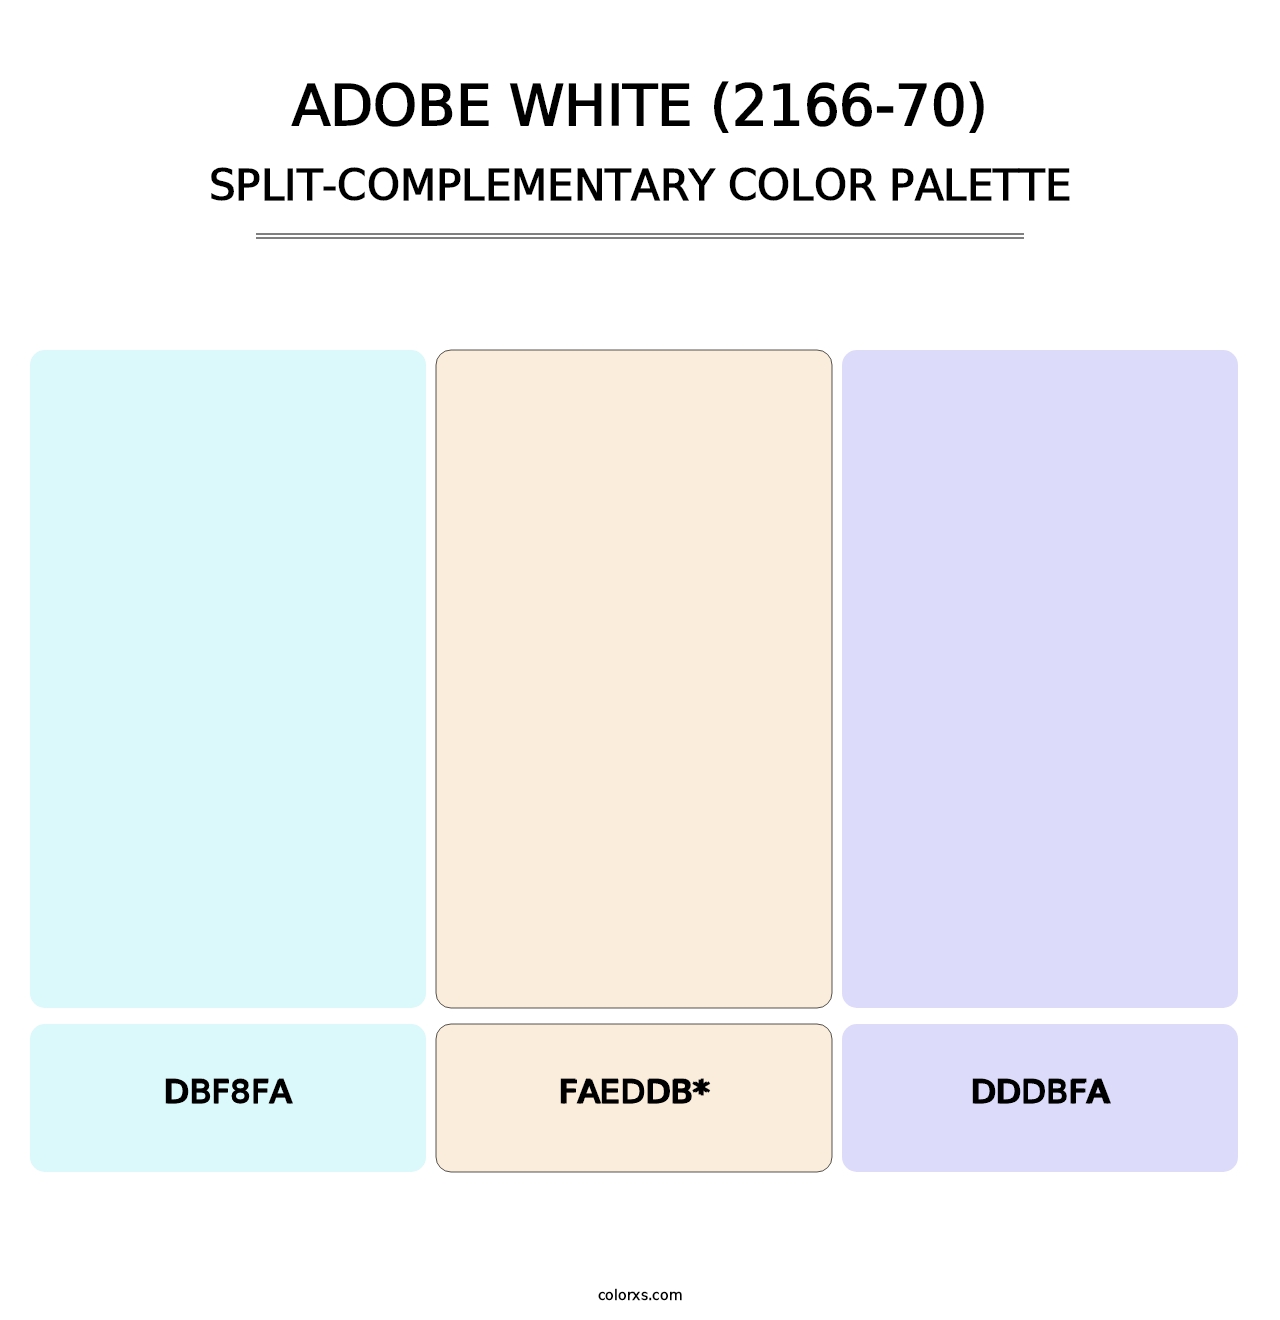 Adobe White (2166-70) - Split-Complementary Color Palette